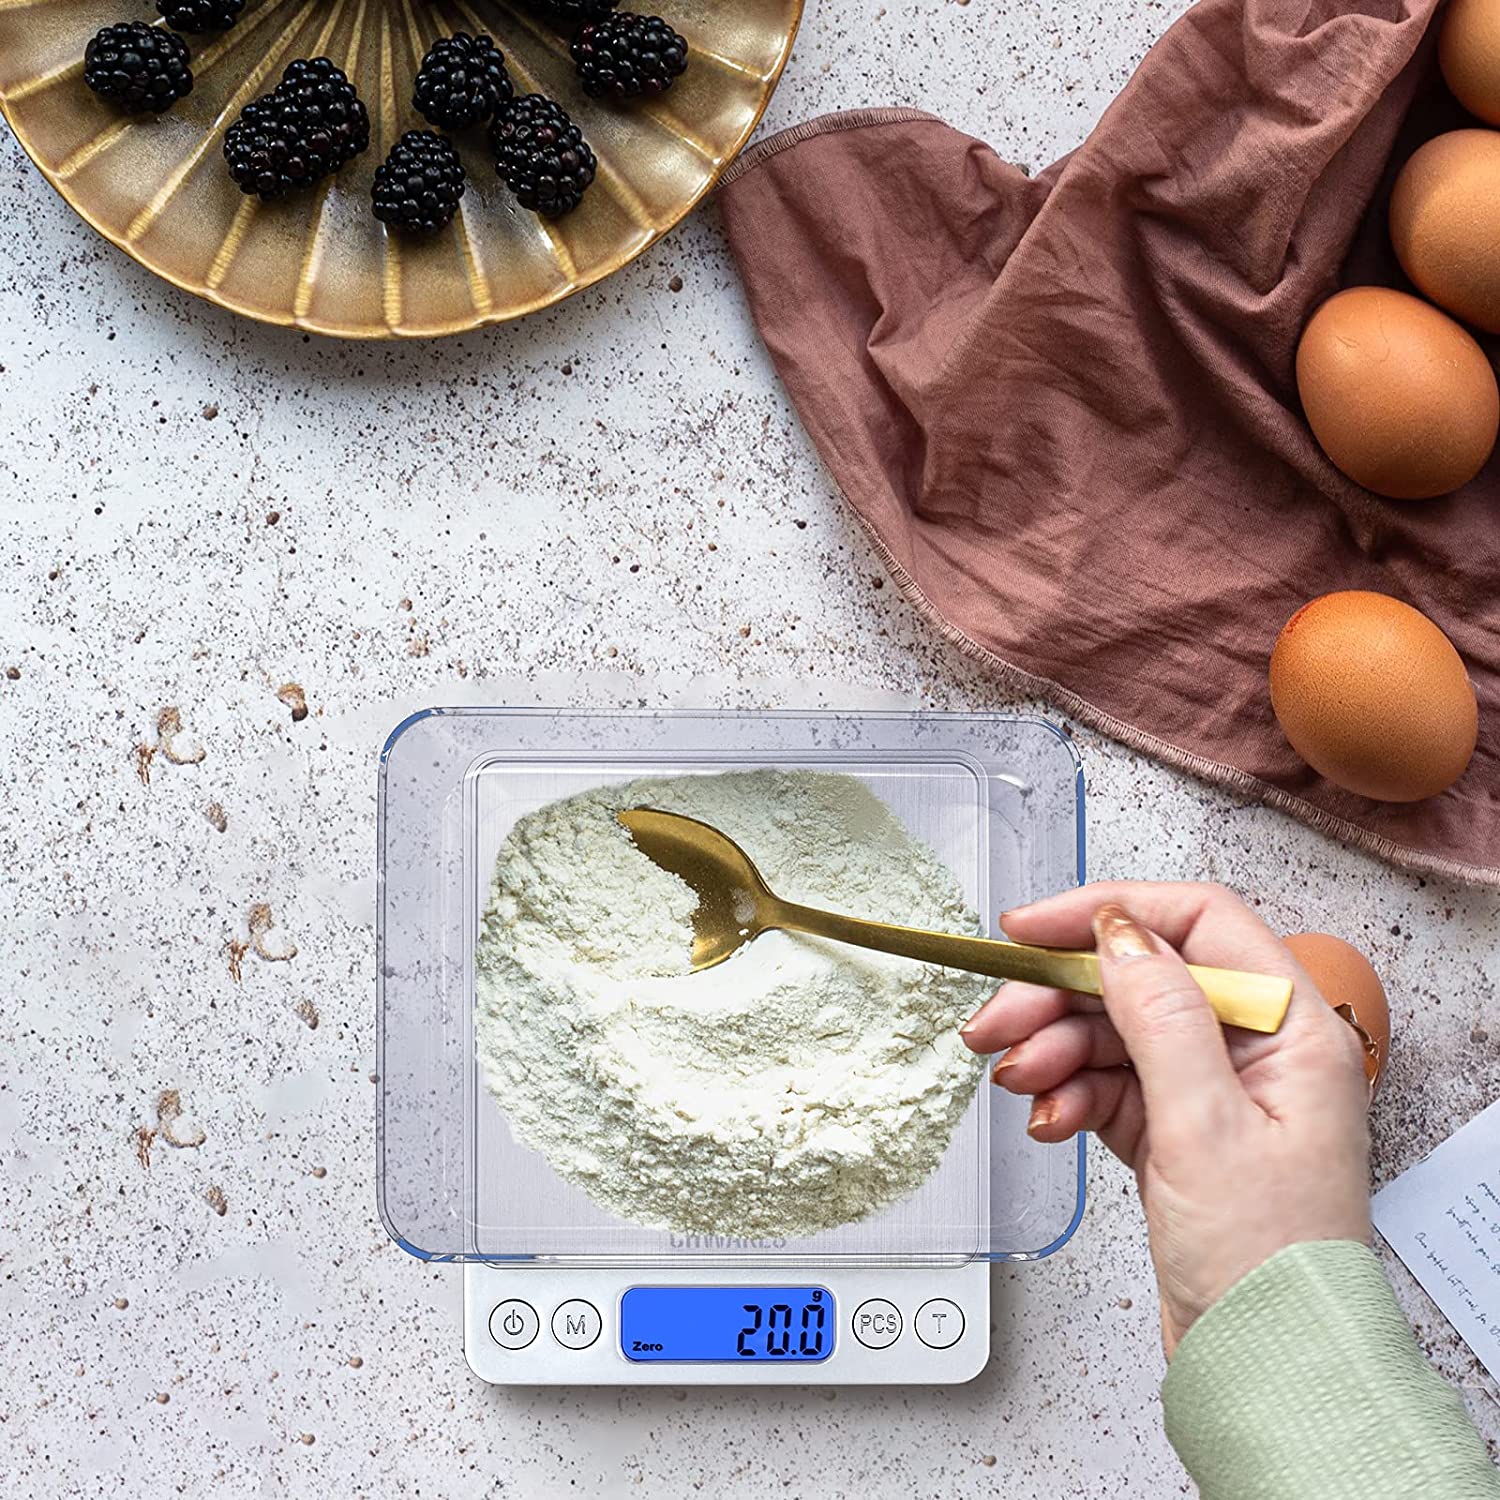 Chwares Digital Kitchen Scales,usb Charging, 3kg/0.1g Mini Food